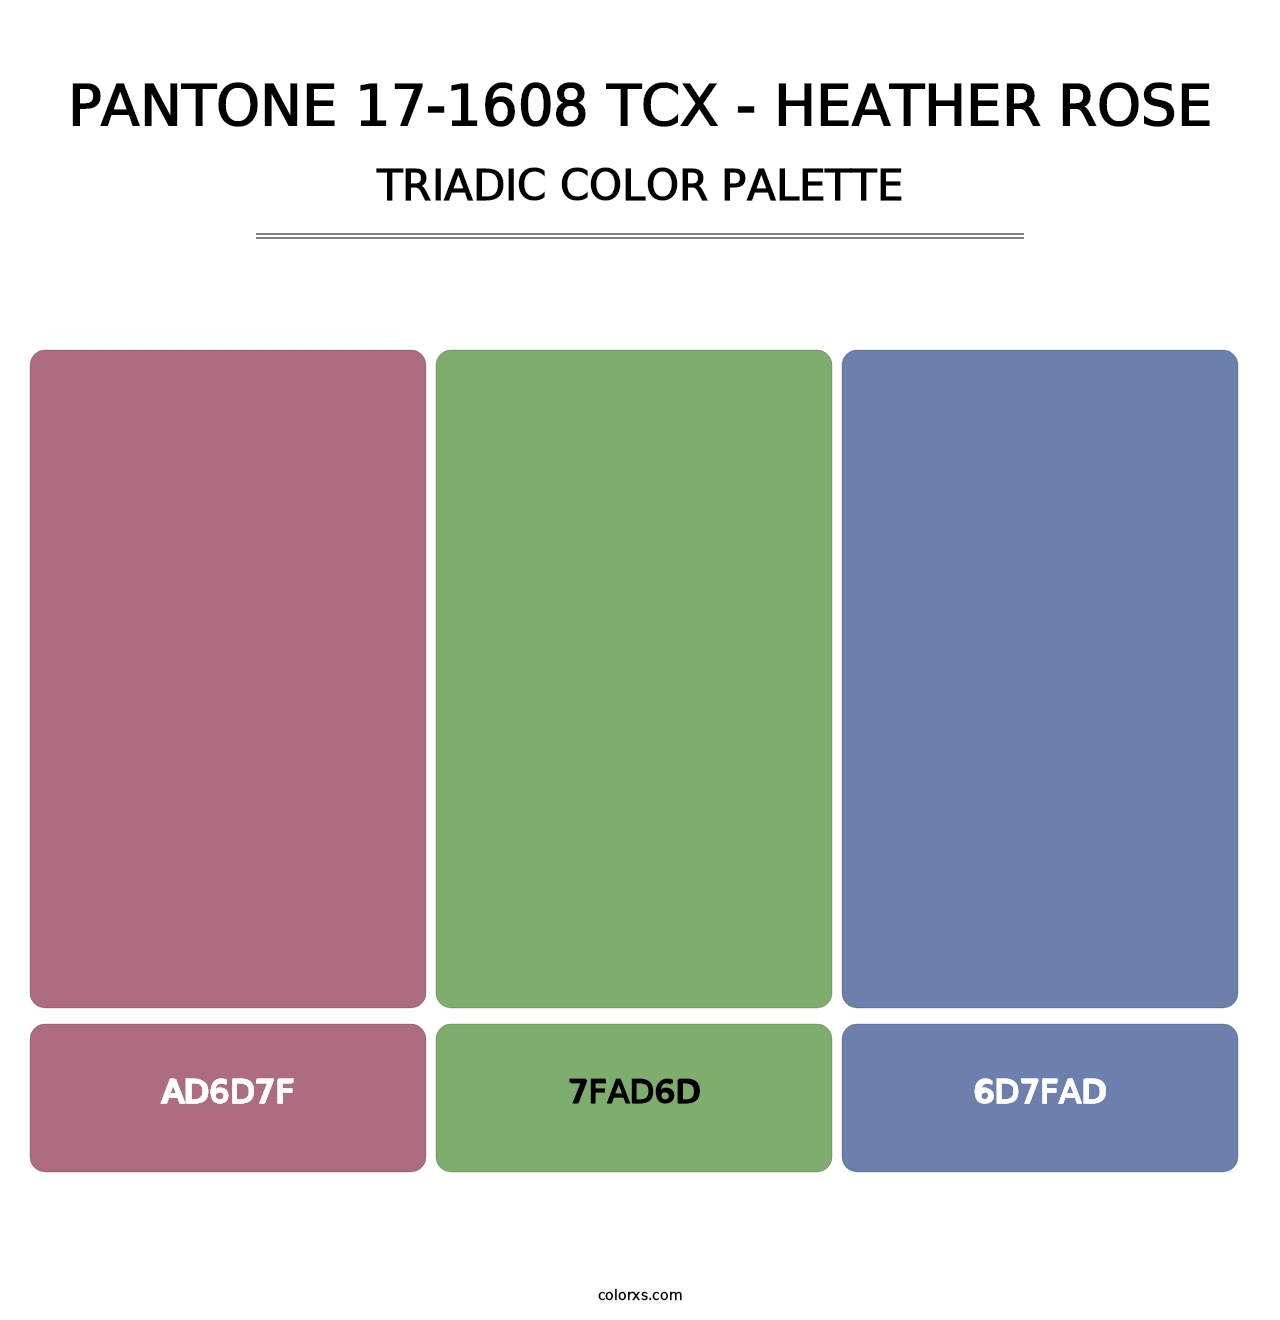 PANTONE 17-1608 TCX - Heather Rose - Triadic Color Palette